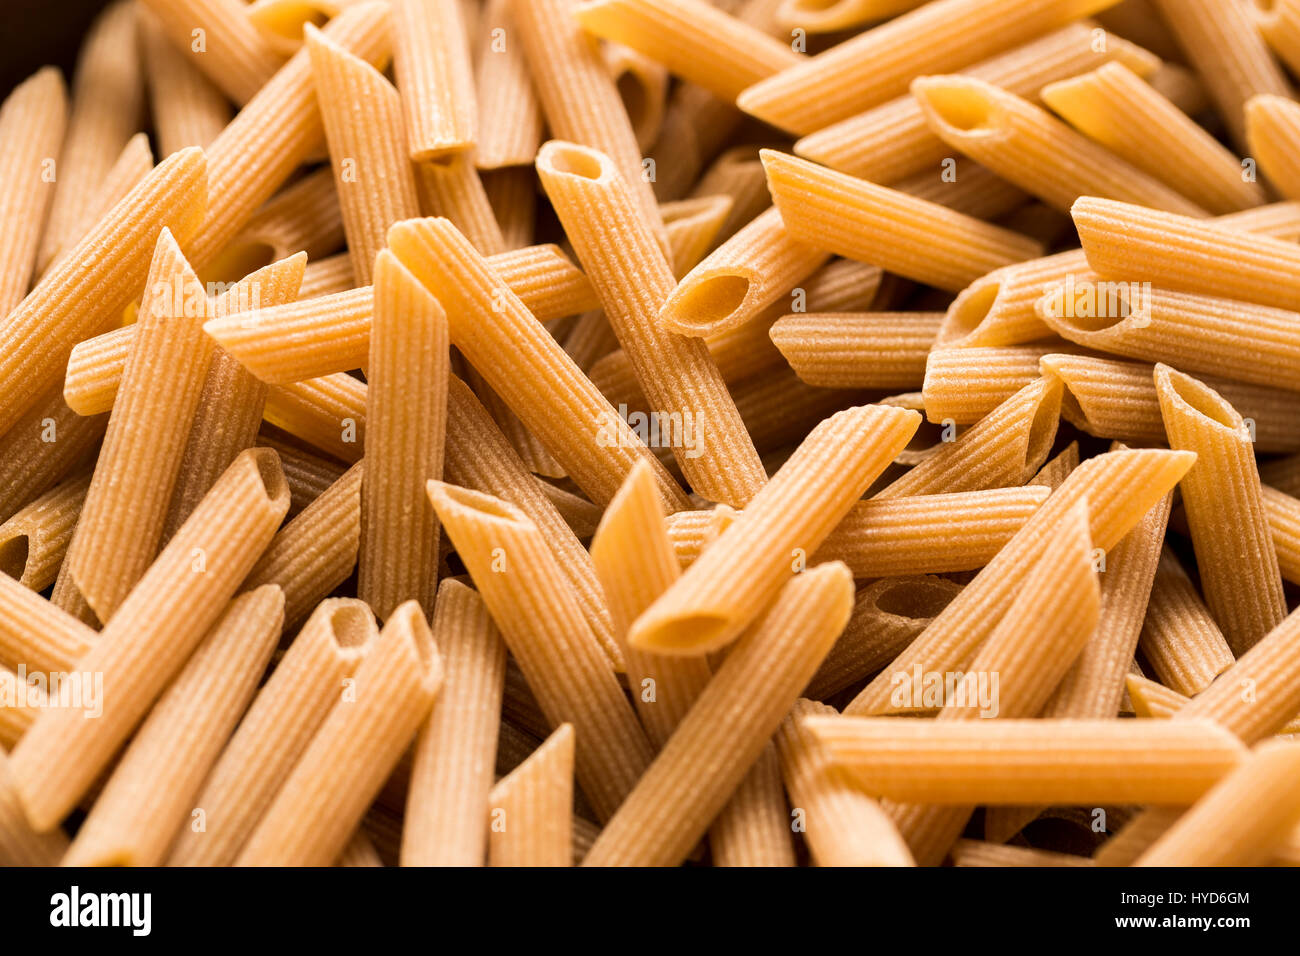 Wholegrain manicotti pasta Stock Photo